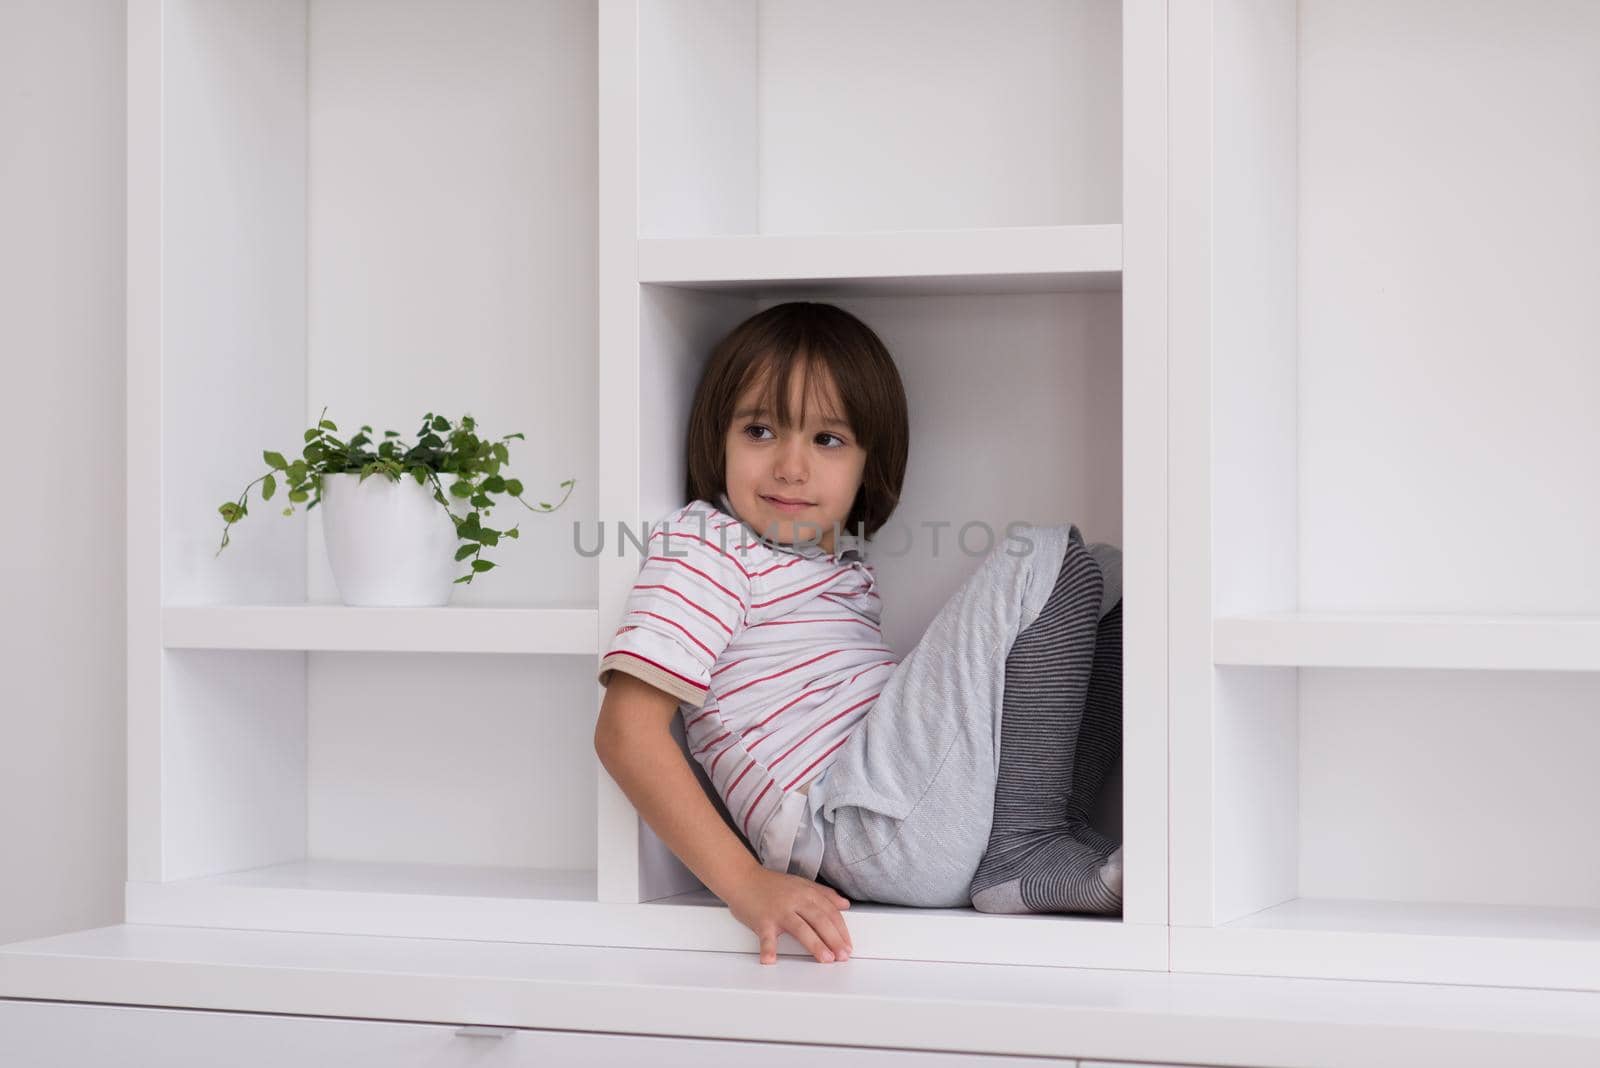 young boy posing on a shelf by dotshock